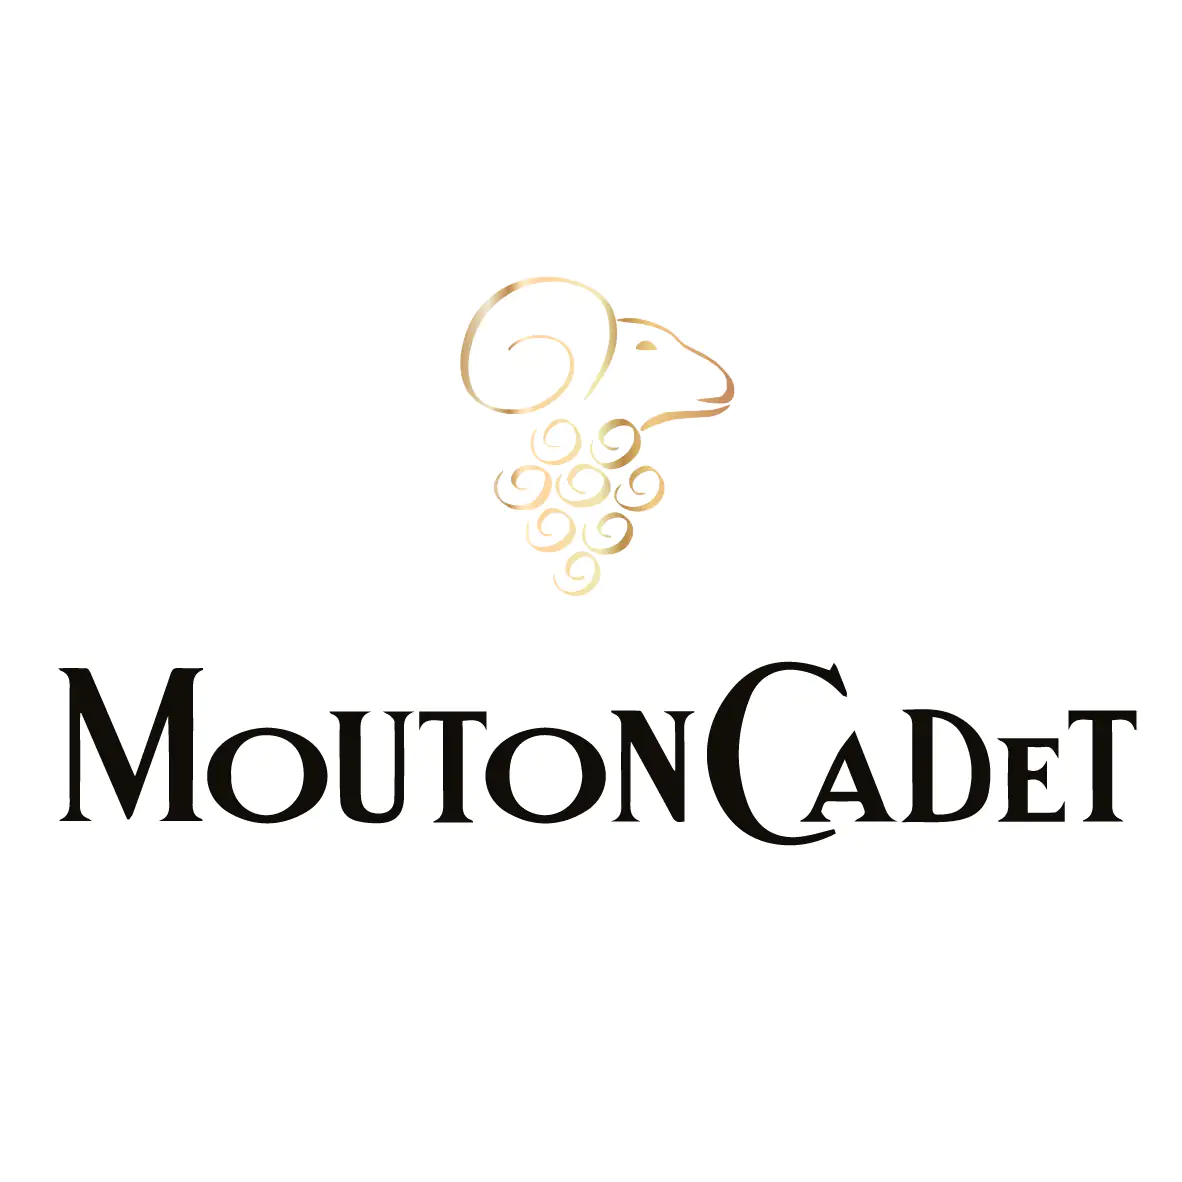 Mouton Cadet